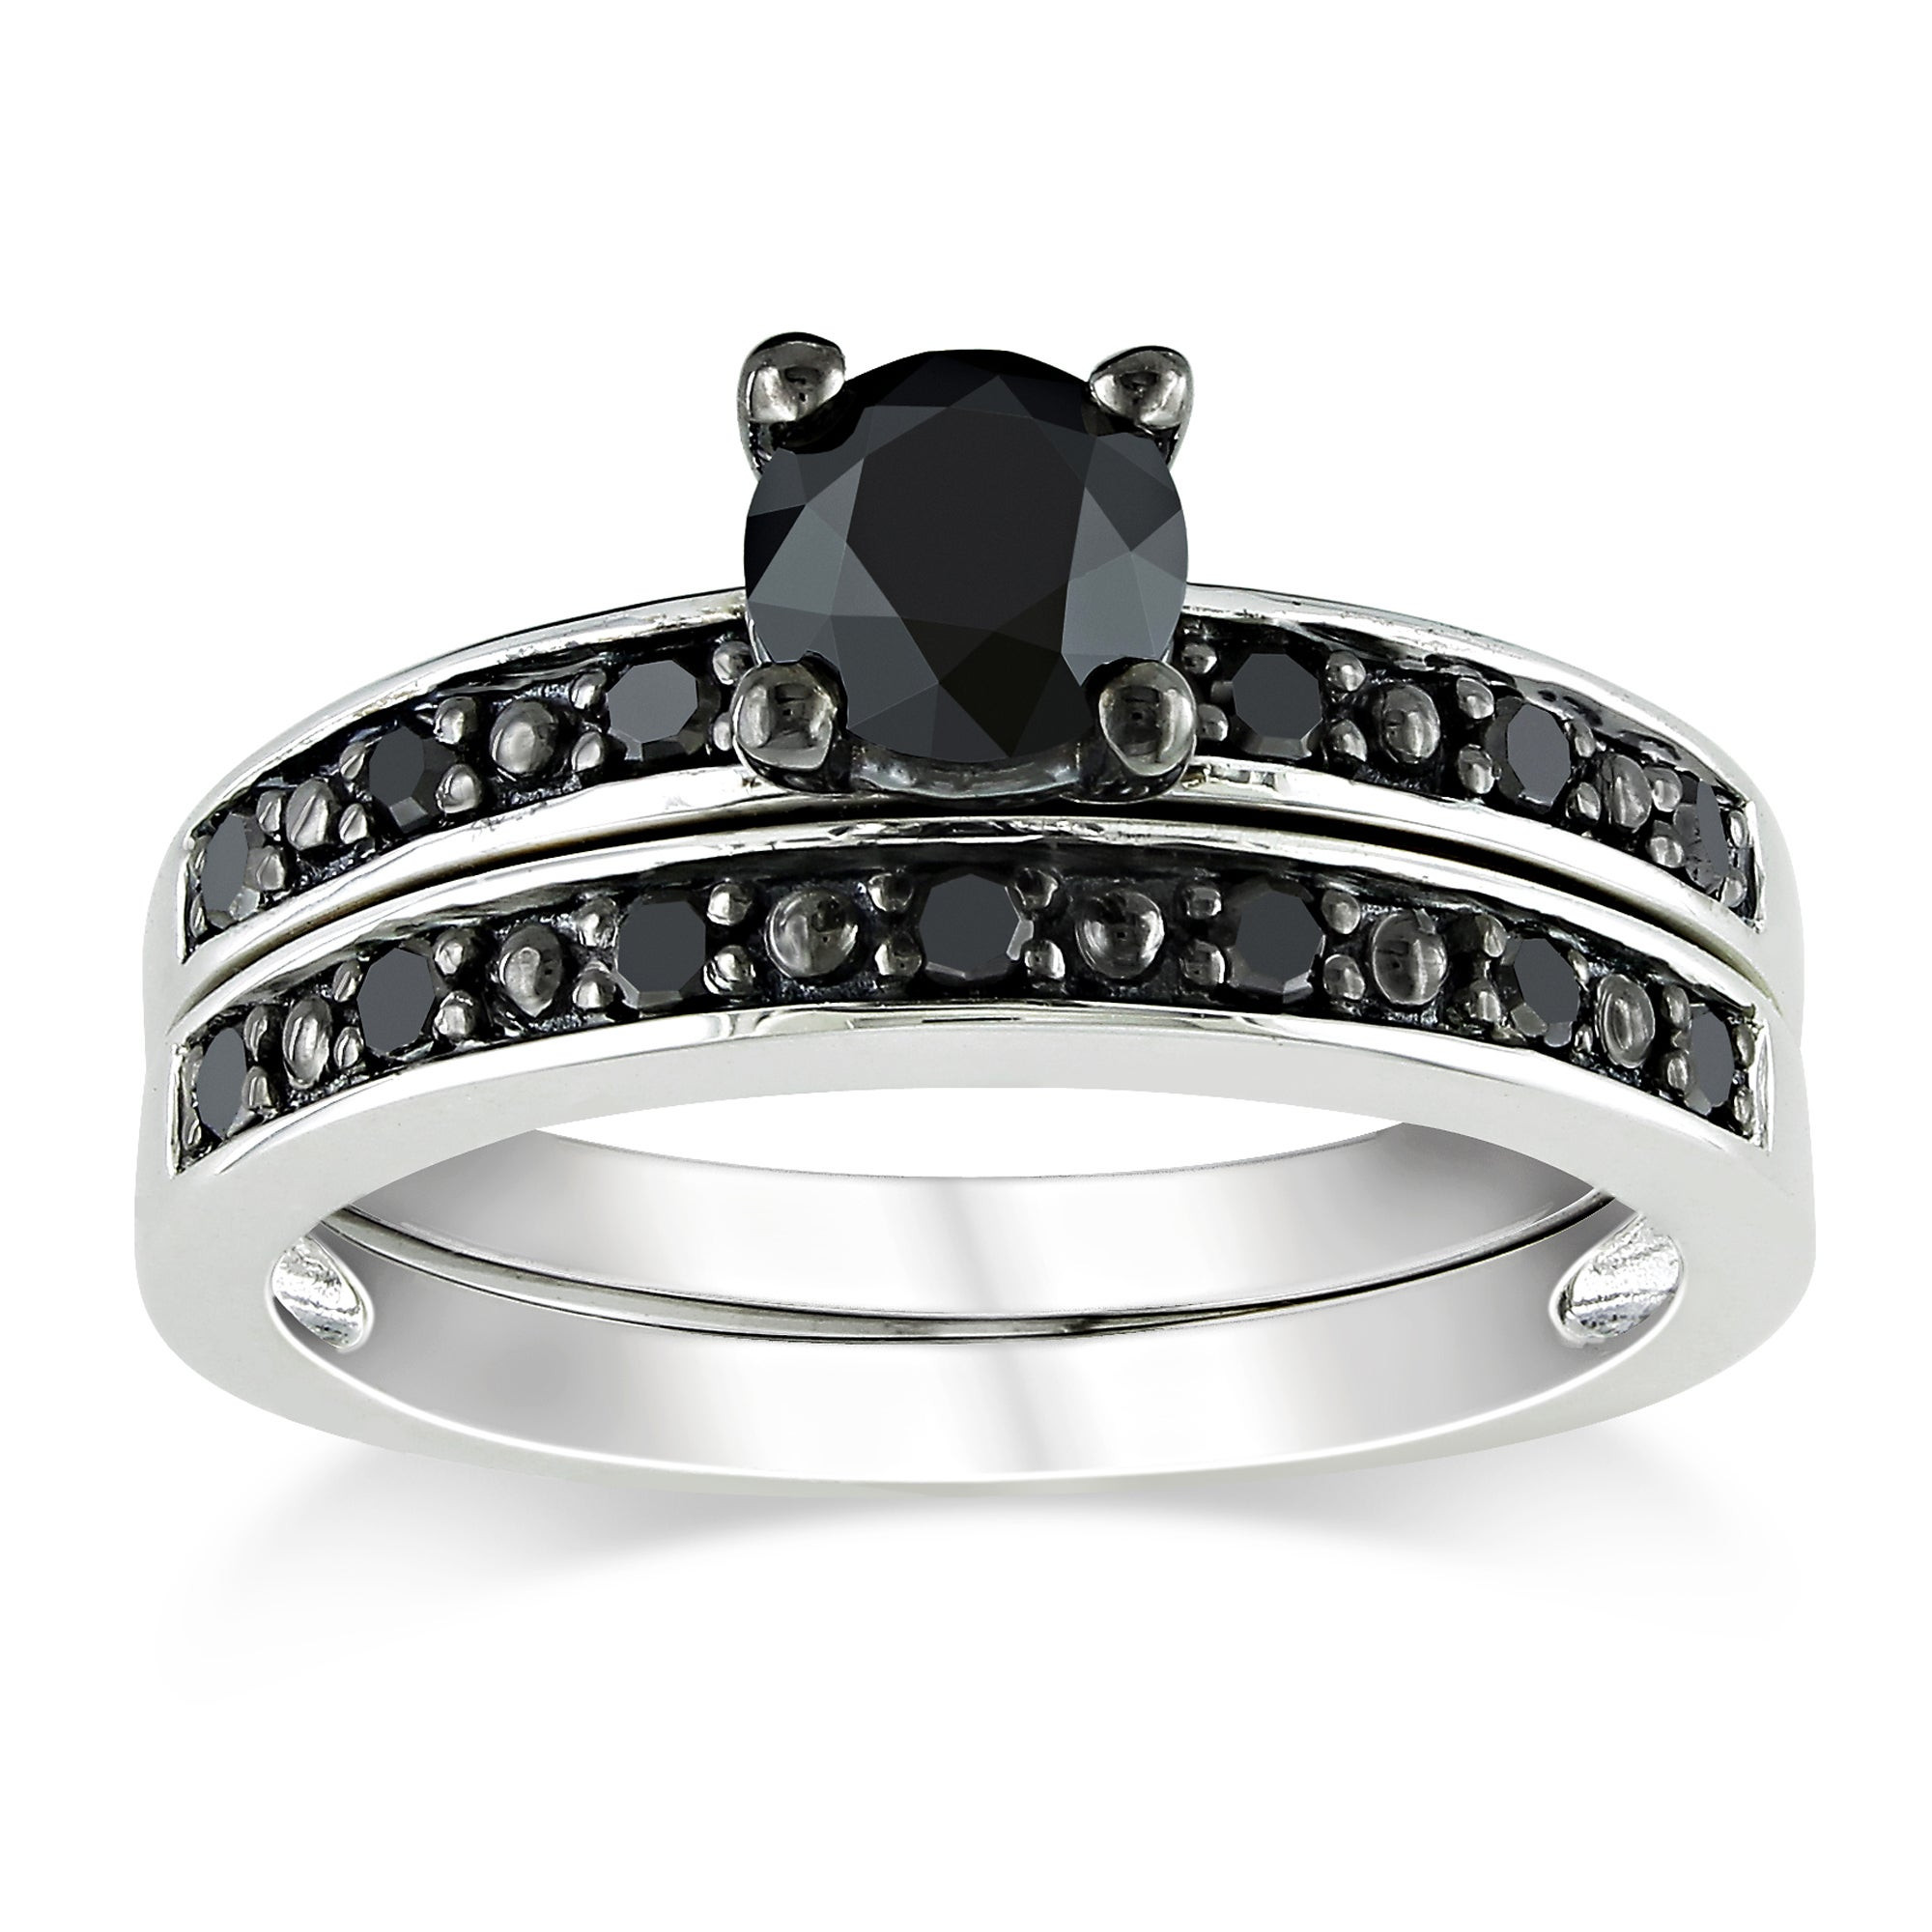 Black Diamond Wedding Ring Sets
 Sterling Silver 1ct TDW Black Diamond Bridal Ring Set